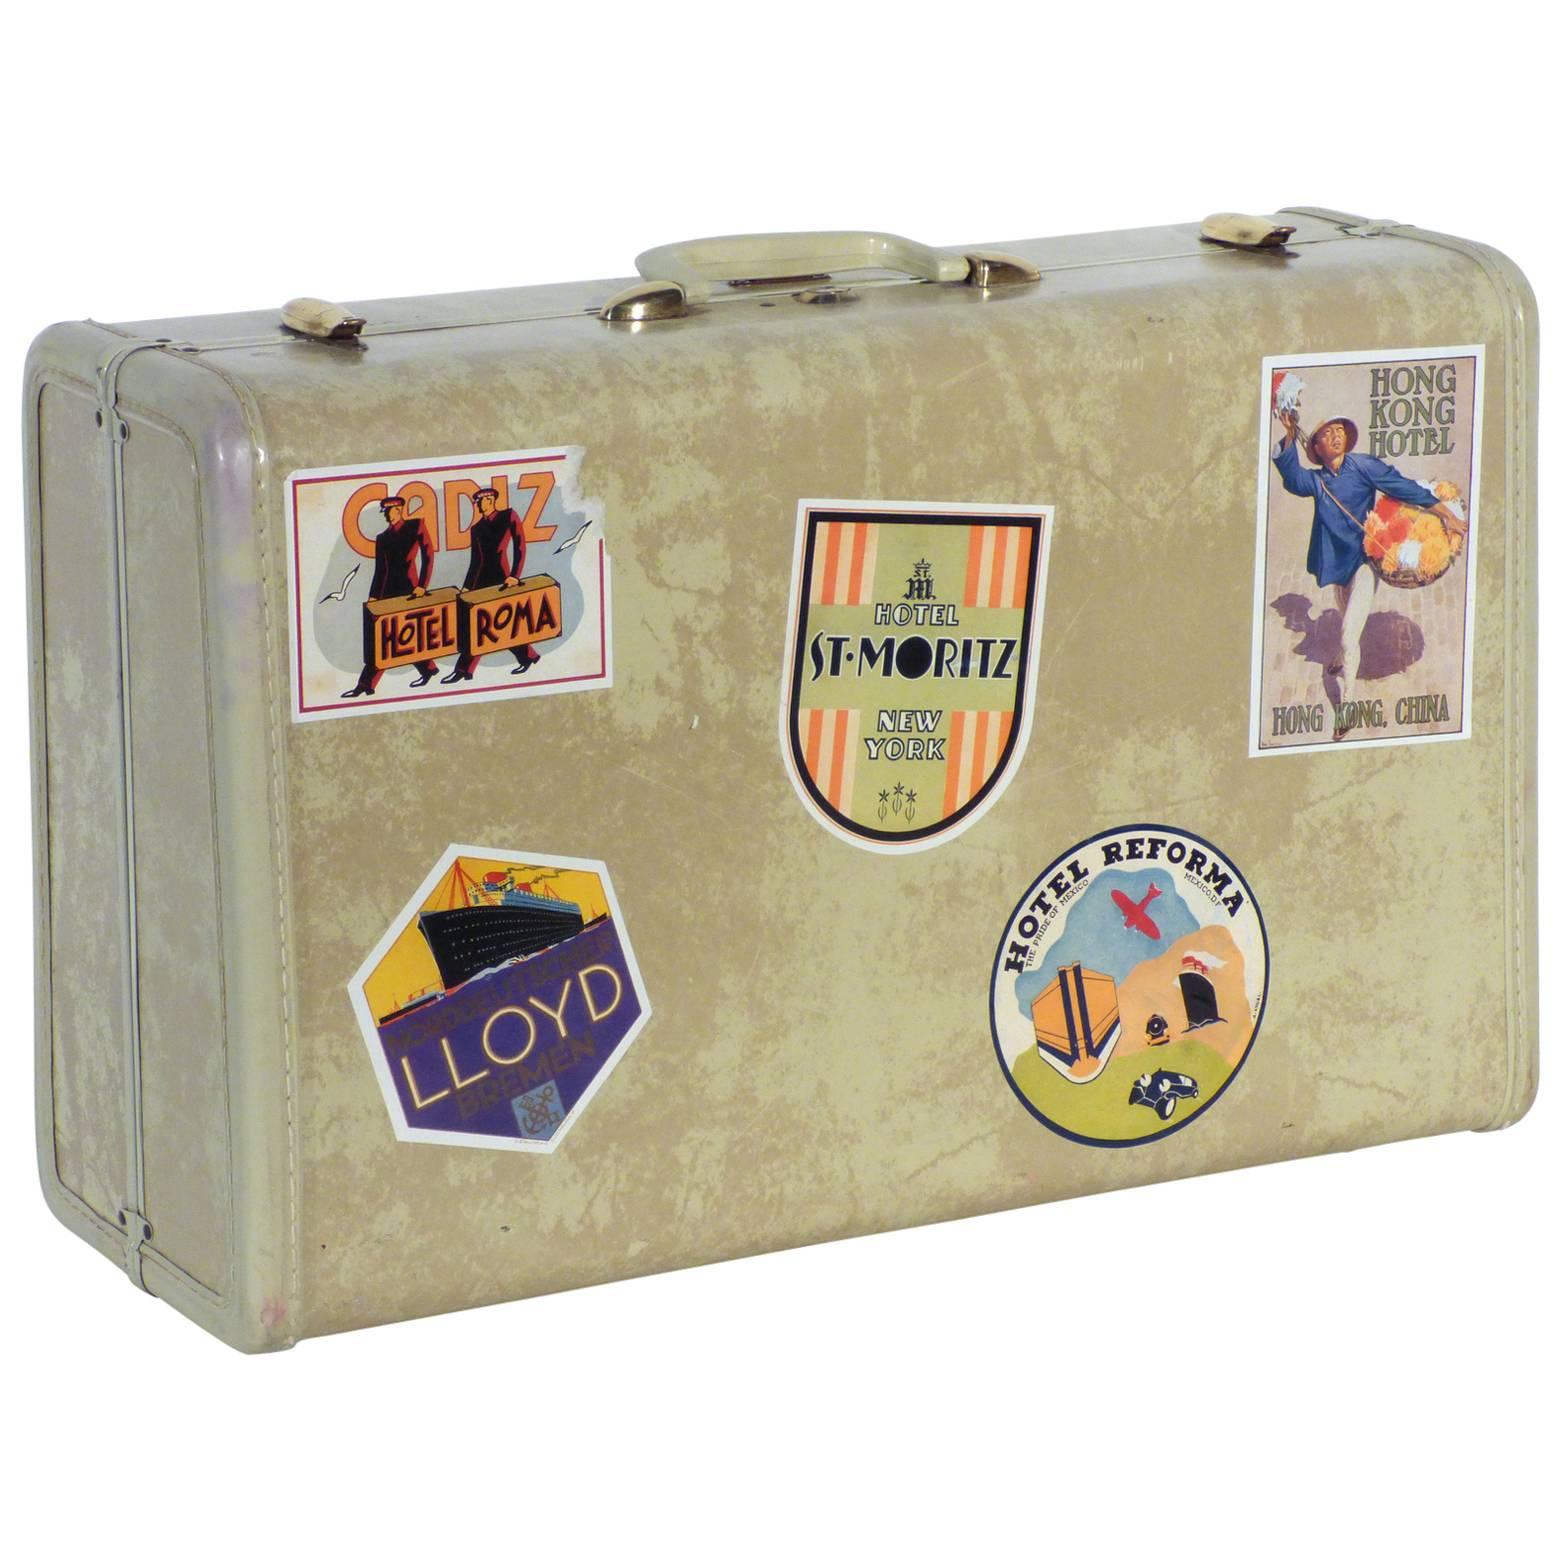 Samsonite Vintage Suitcase For Sale